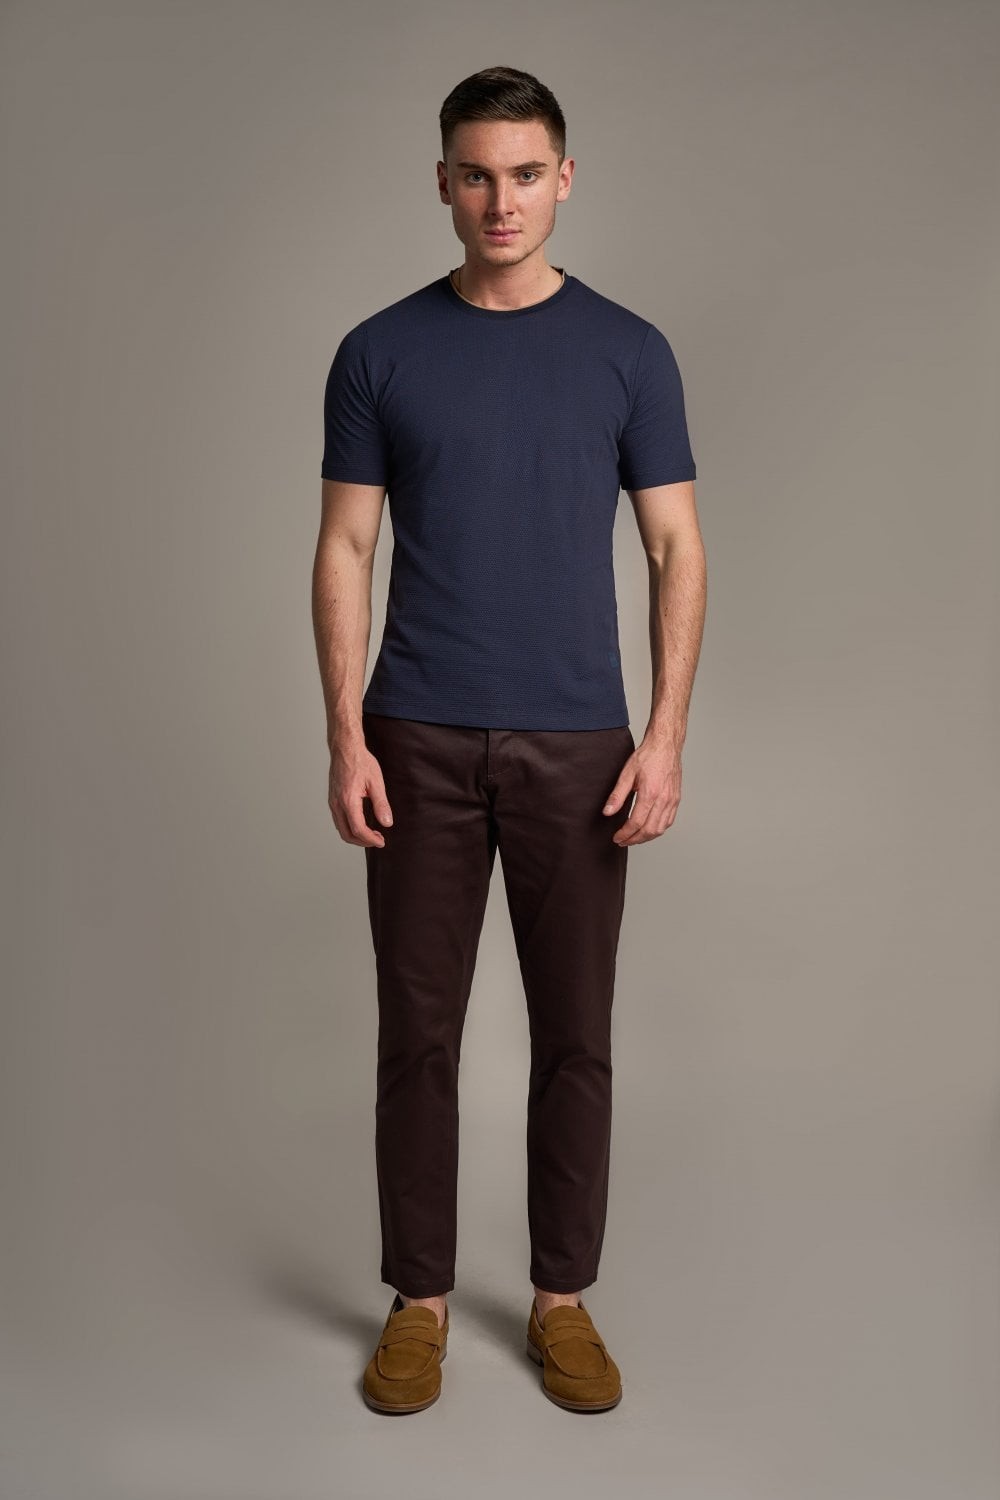 Herren Baumwoll-Slim-Fit T-Shirt - BYRON - Navy blau